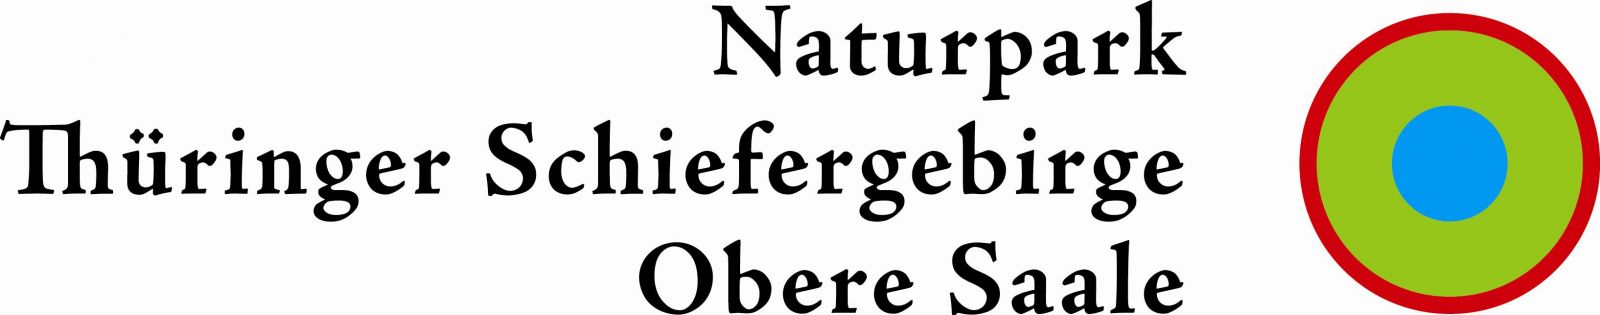 Bild Naturpark Thüringer Schiefergebirge Obere Saale